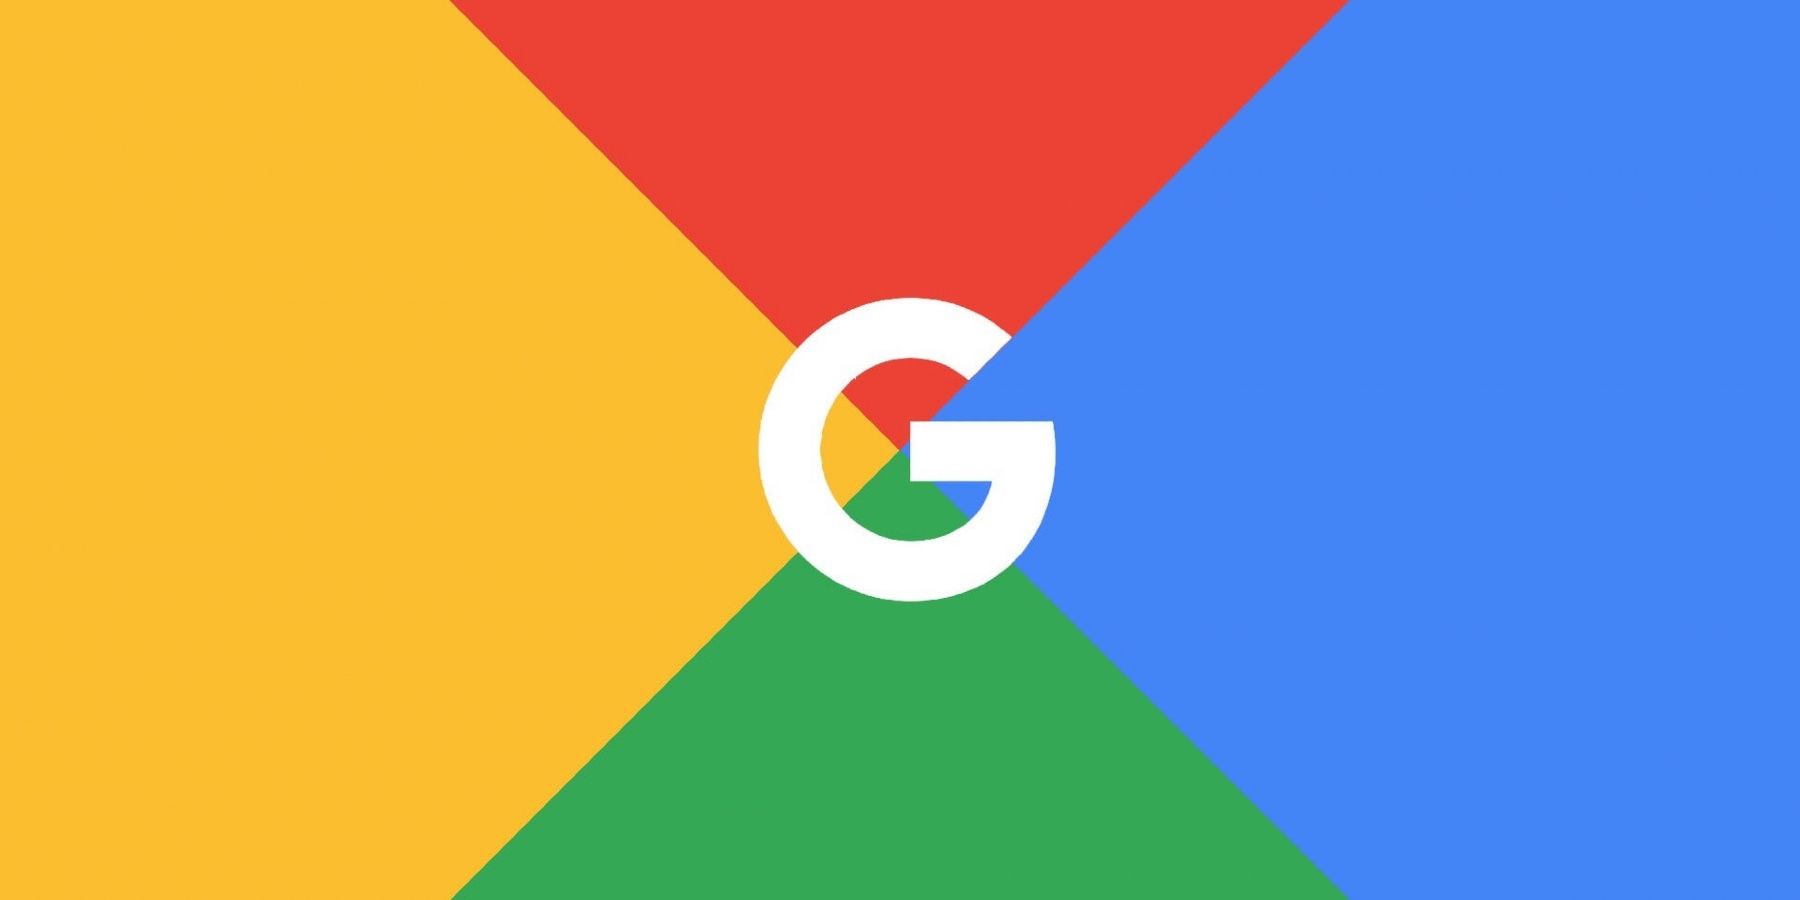 Google G Logo